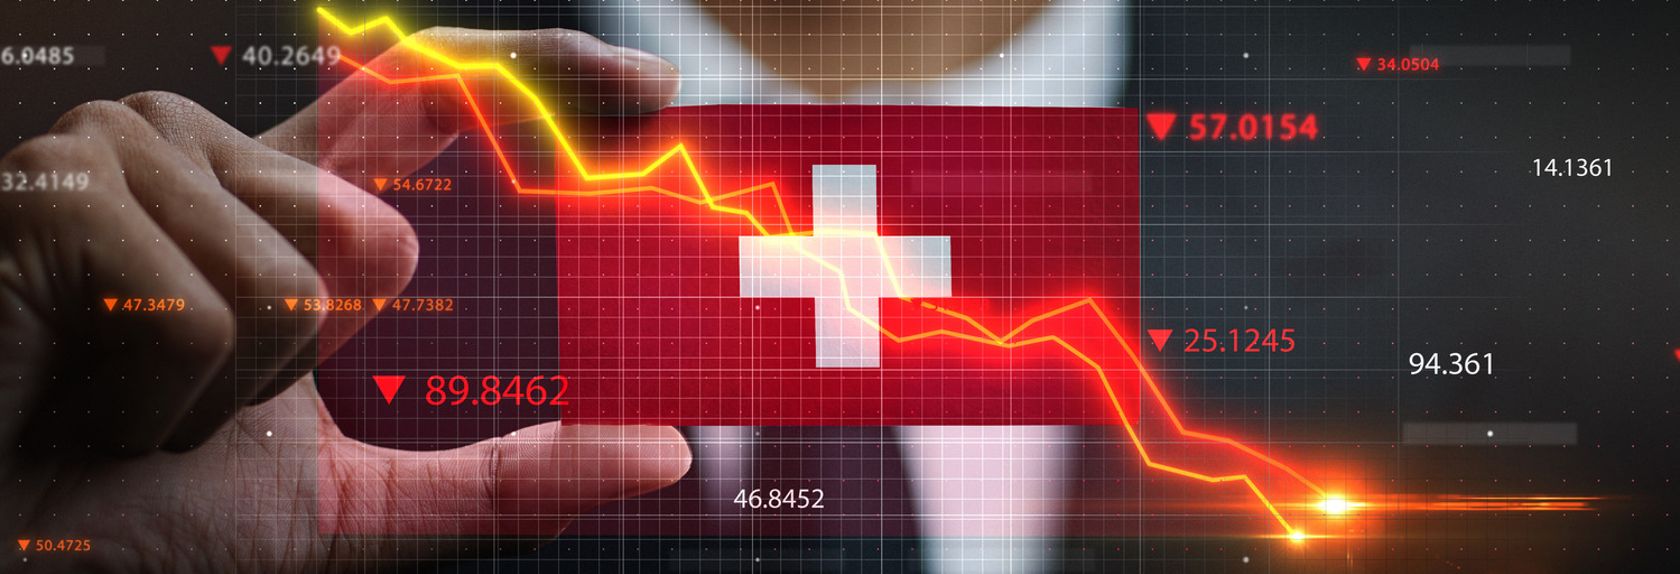 Credit Suisse: cos’è successo e cosa succederà ora